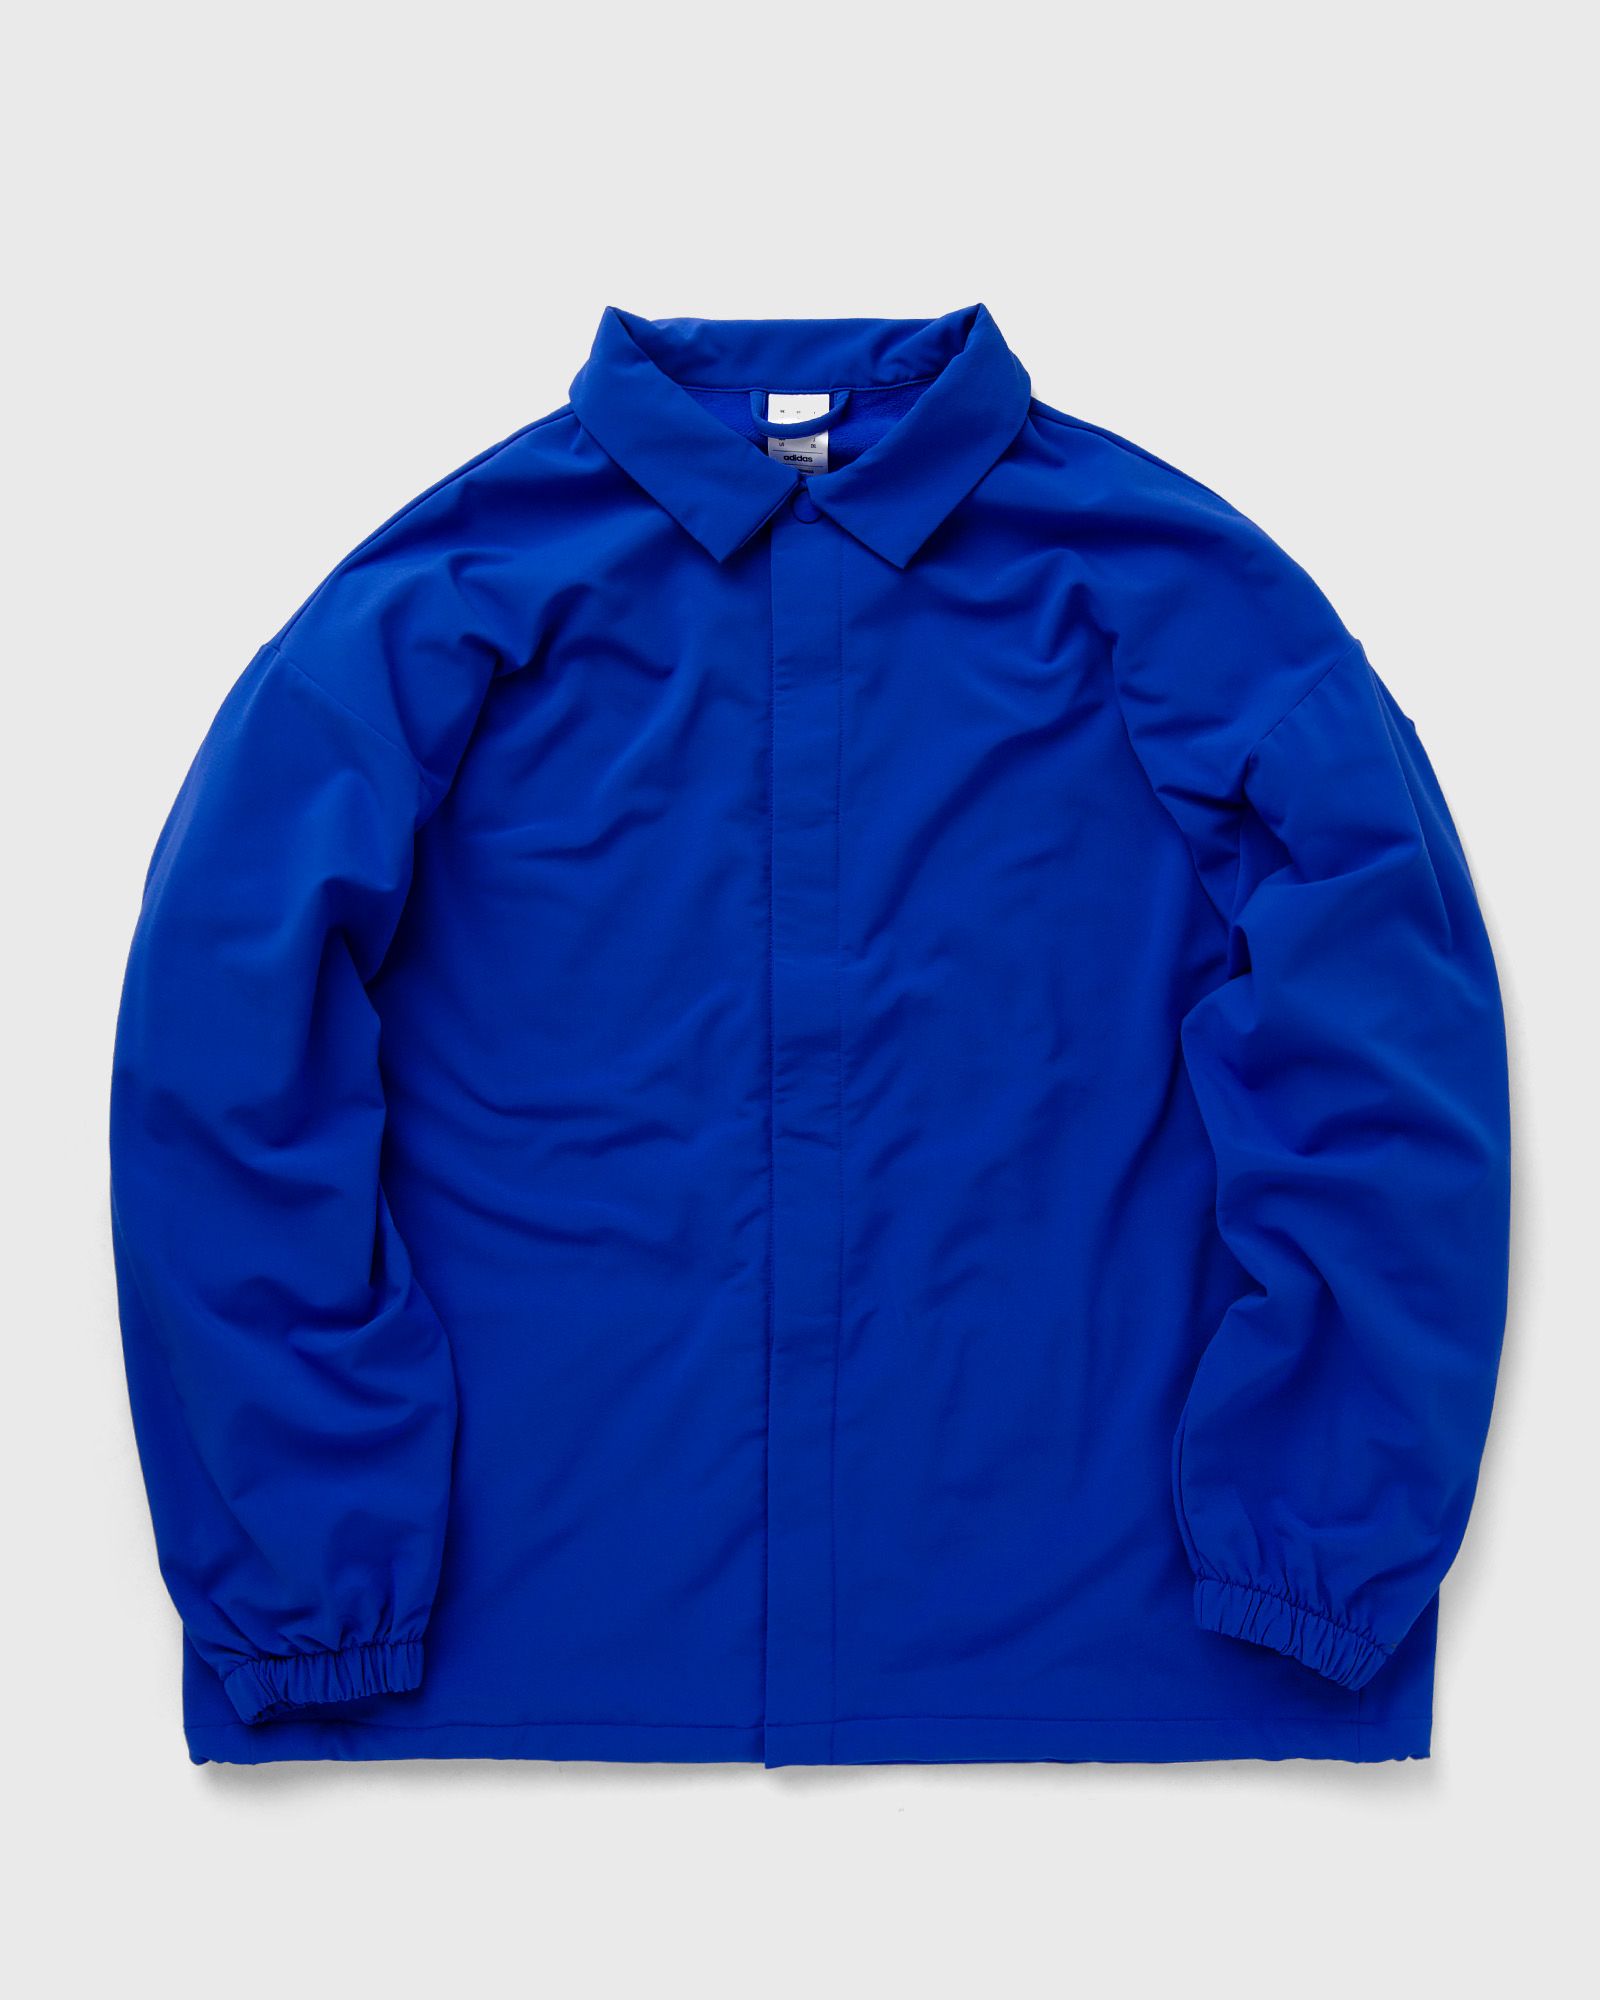 Adidas - adi basketball jacket men track jackets blue in größe:xxl